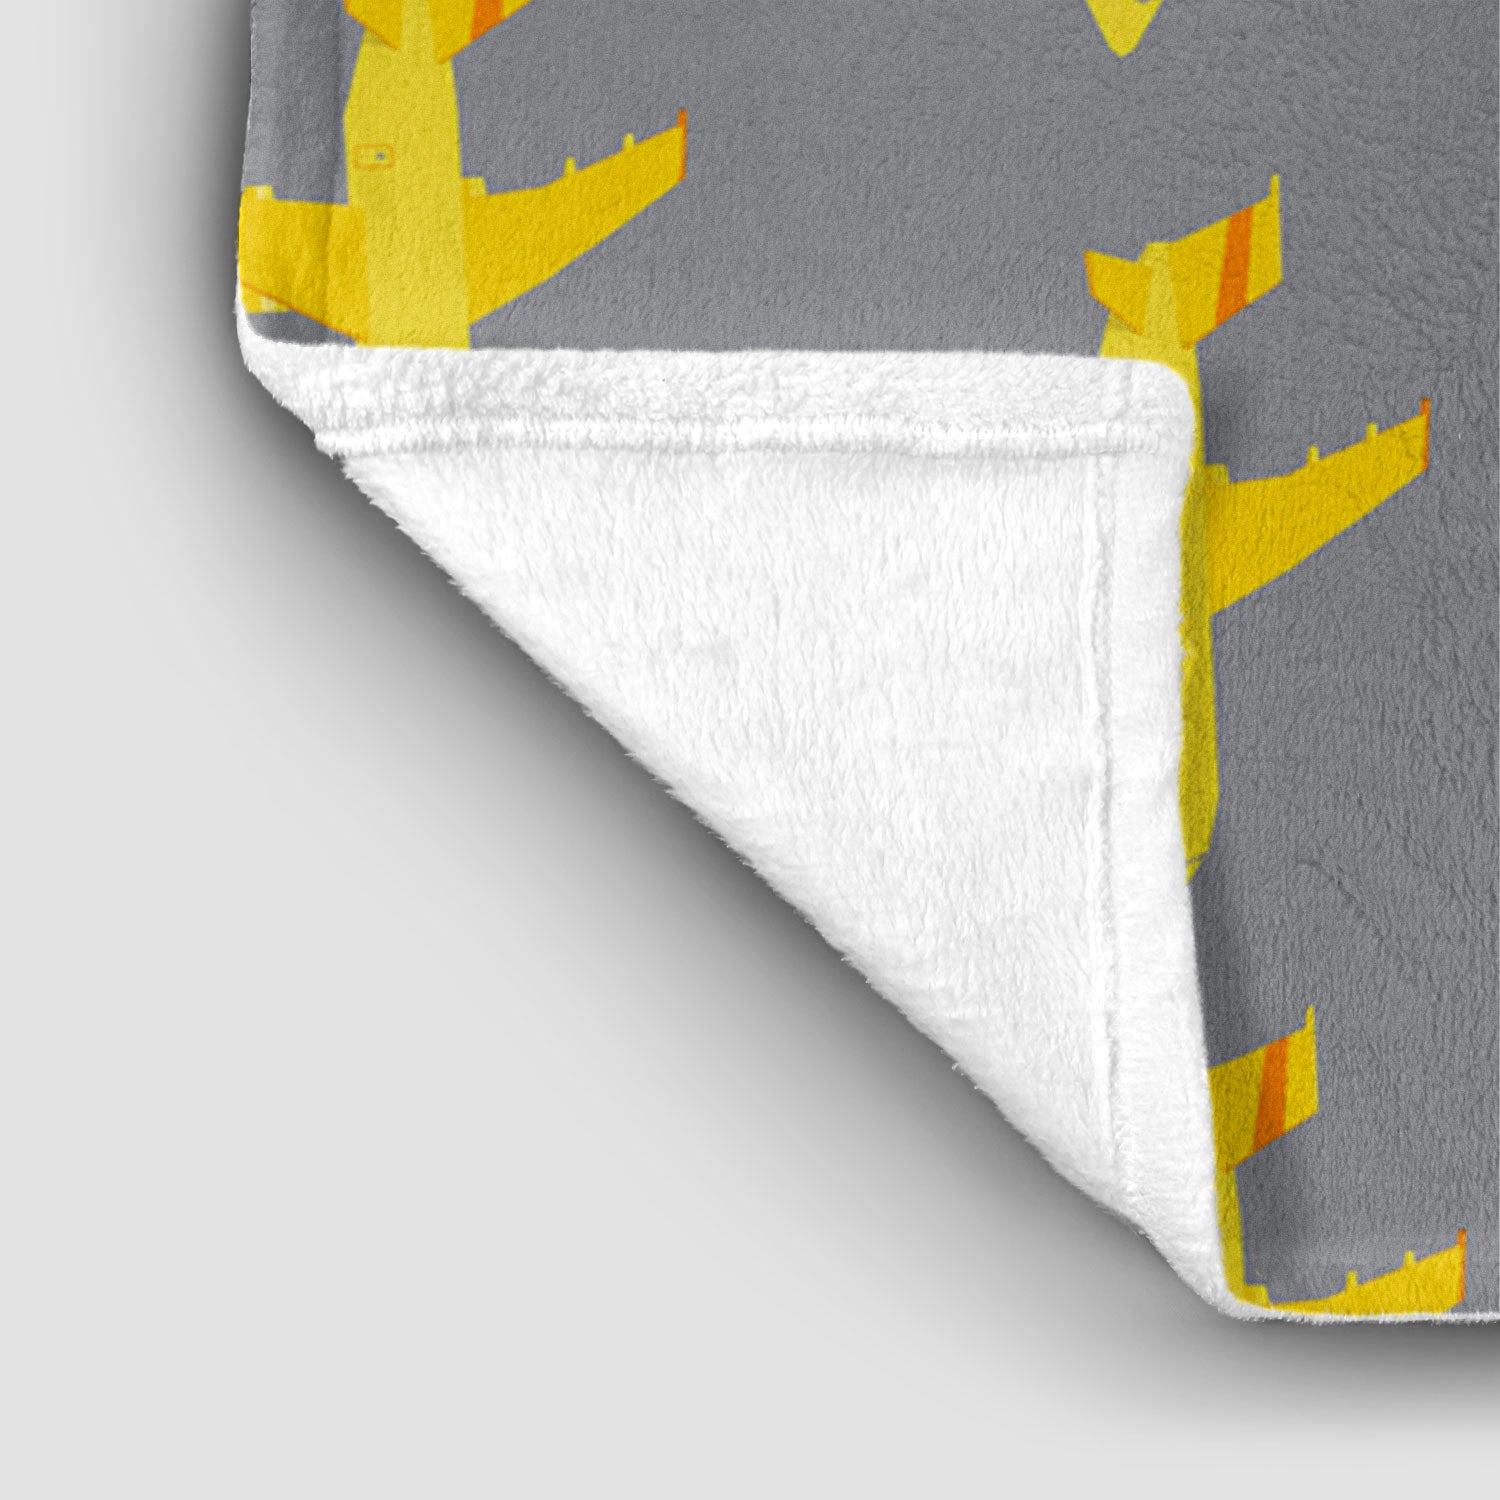 Planes Yellow Ultimate - Blanket